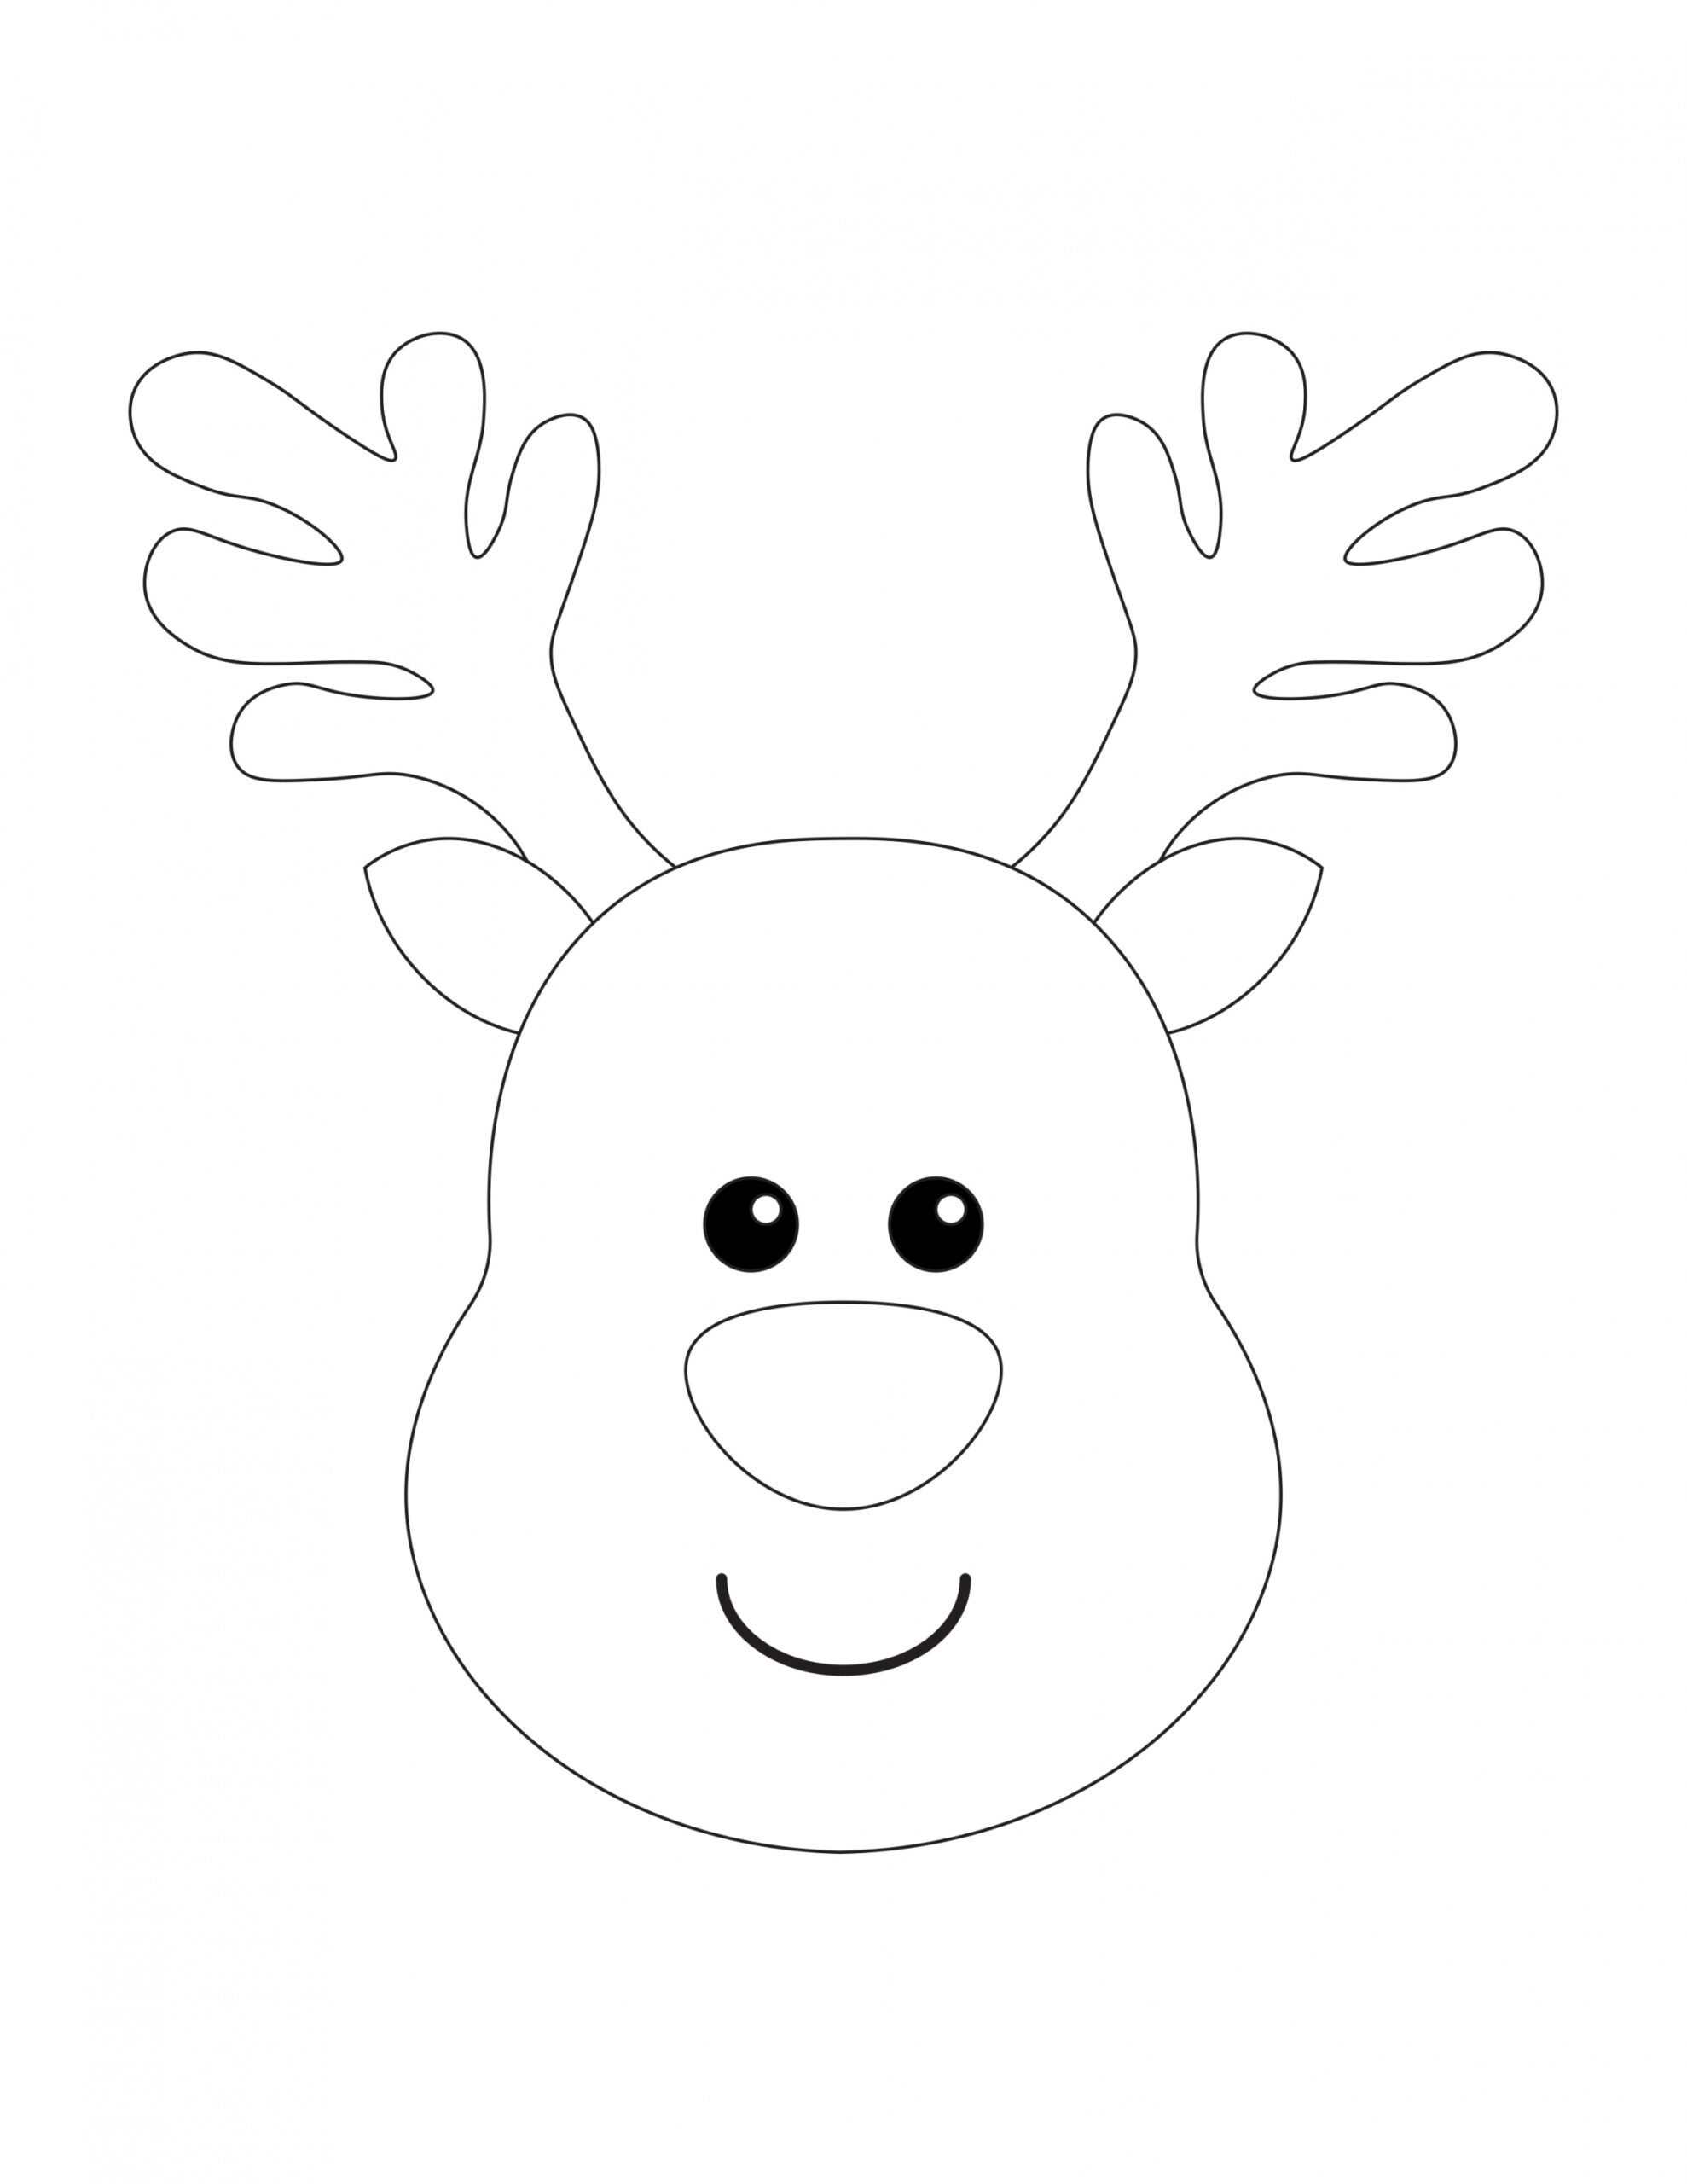 Free Printable Reindeer Templates - Daily Printables - FREE Printables - Build A Reindeer Printable